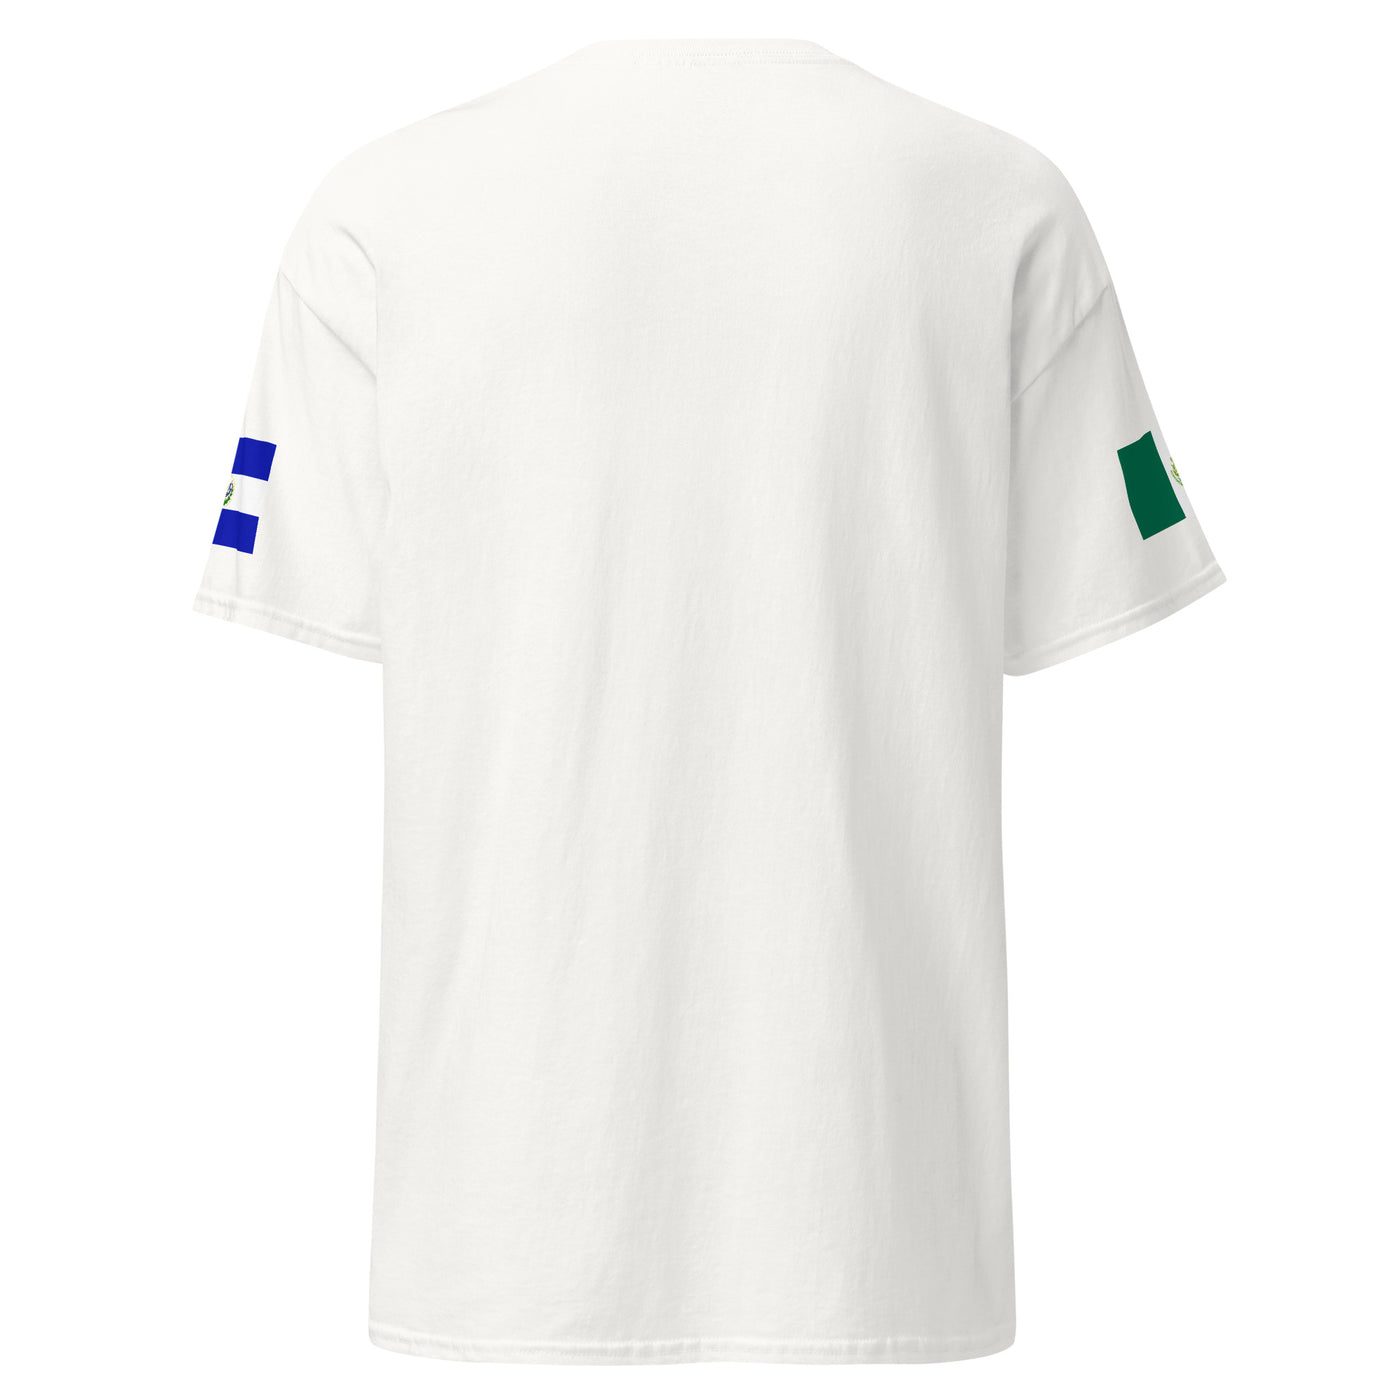 Marquis Gallegos White Shirt (Both Flags)